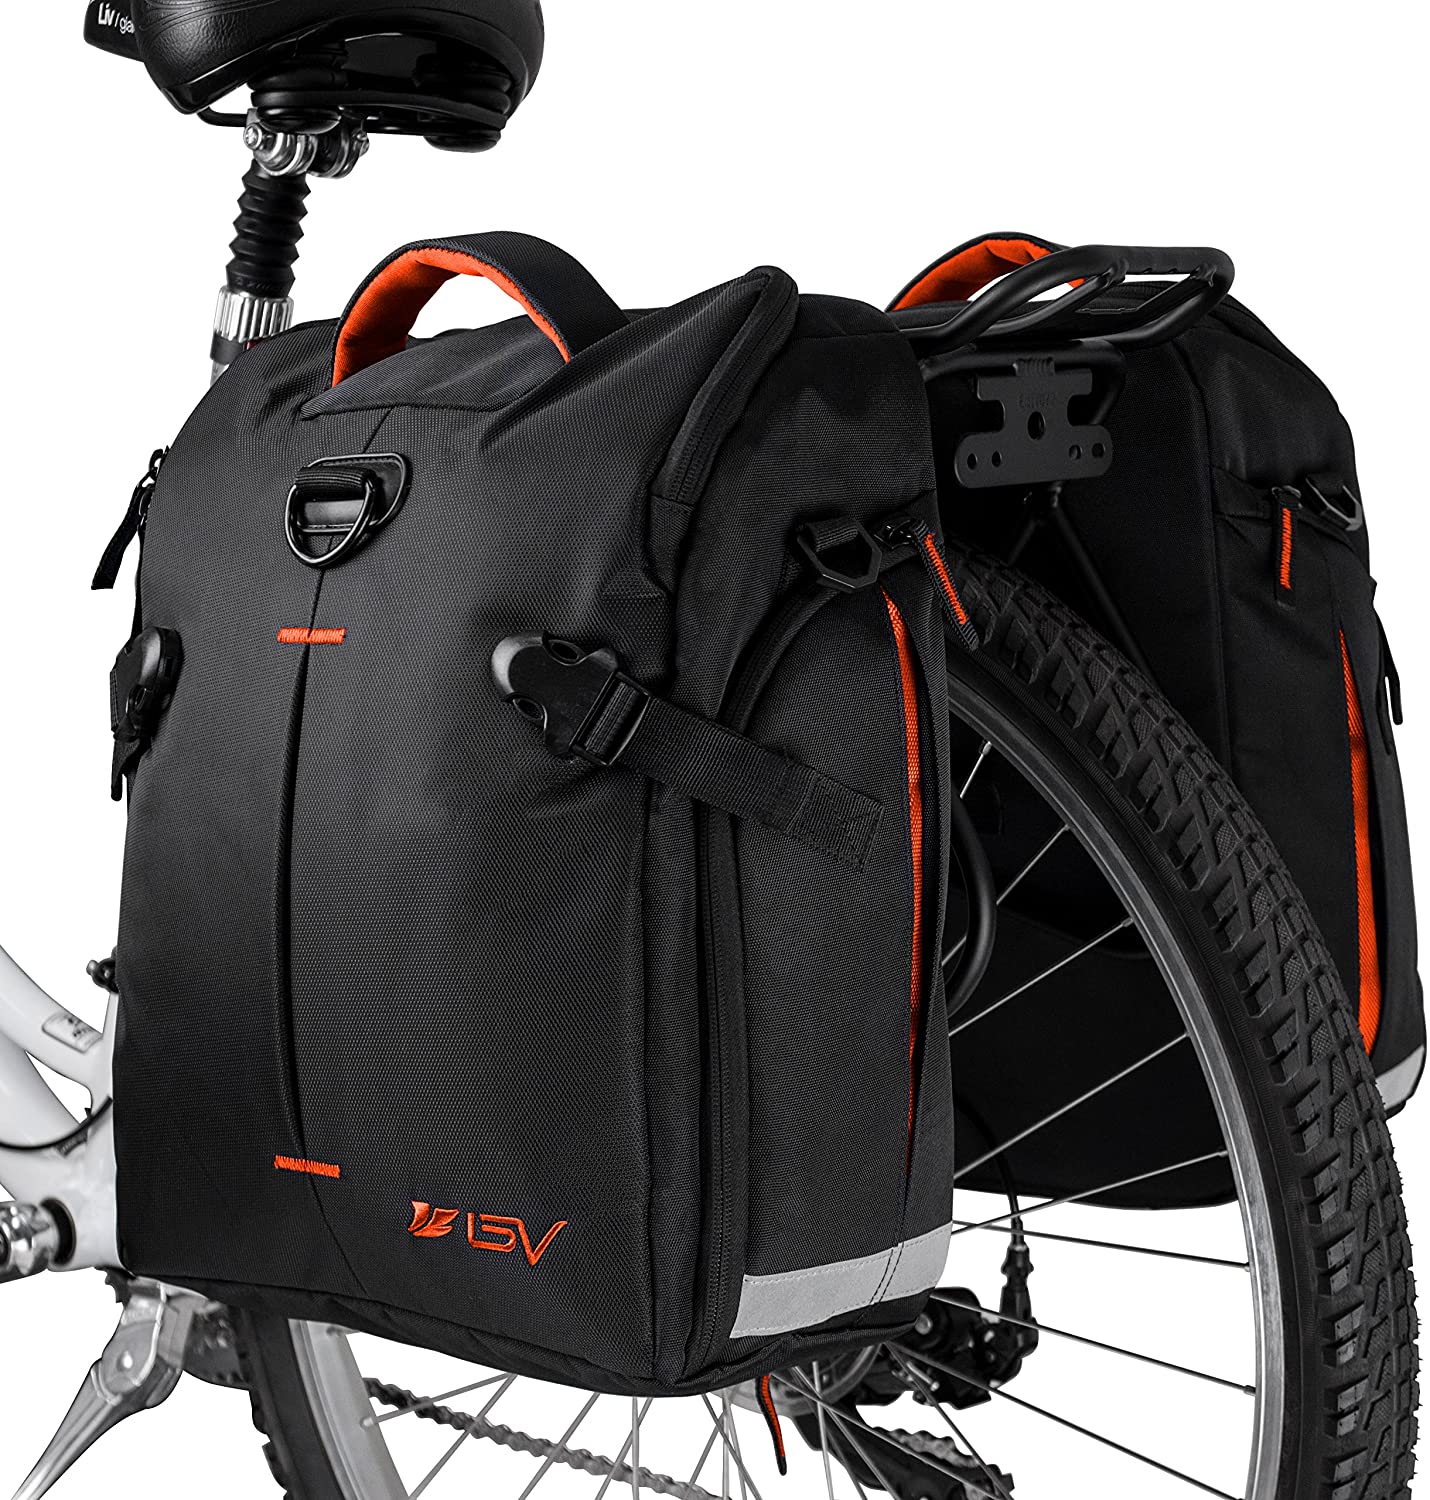 BV Bike Panniers Bags (Pair), Large Capacity, 14 L (each Pannier), Black With Detachable Shoulder Straps And All Weather Rain Covers (ORANGE)